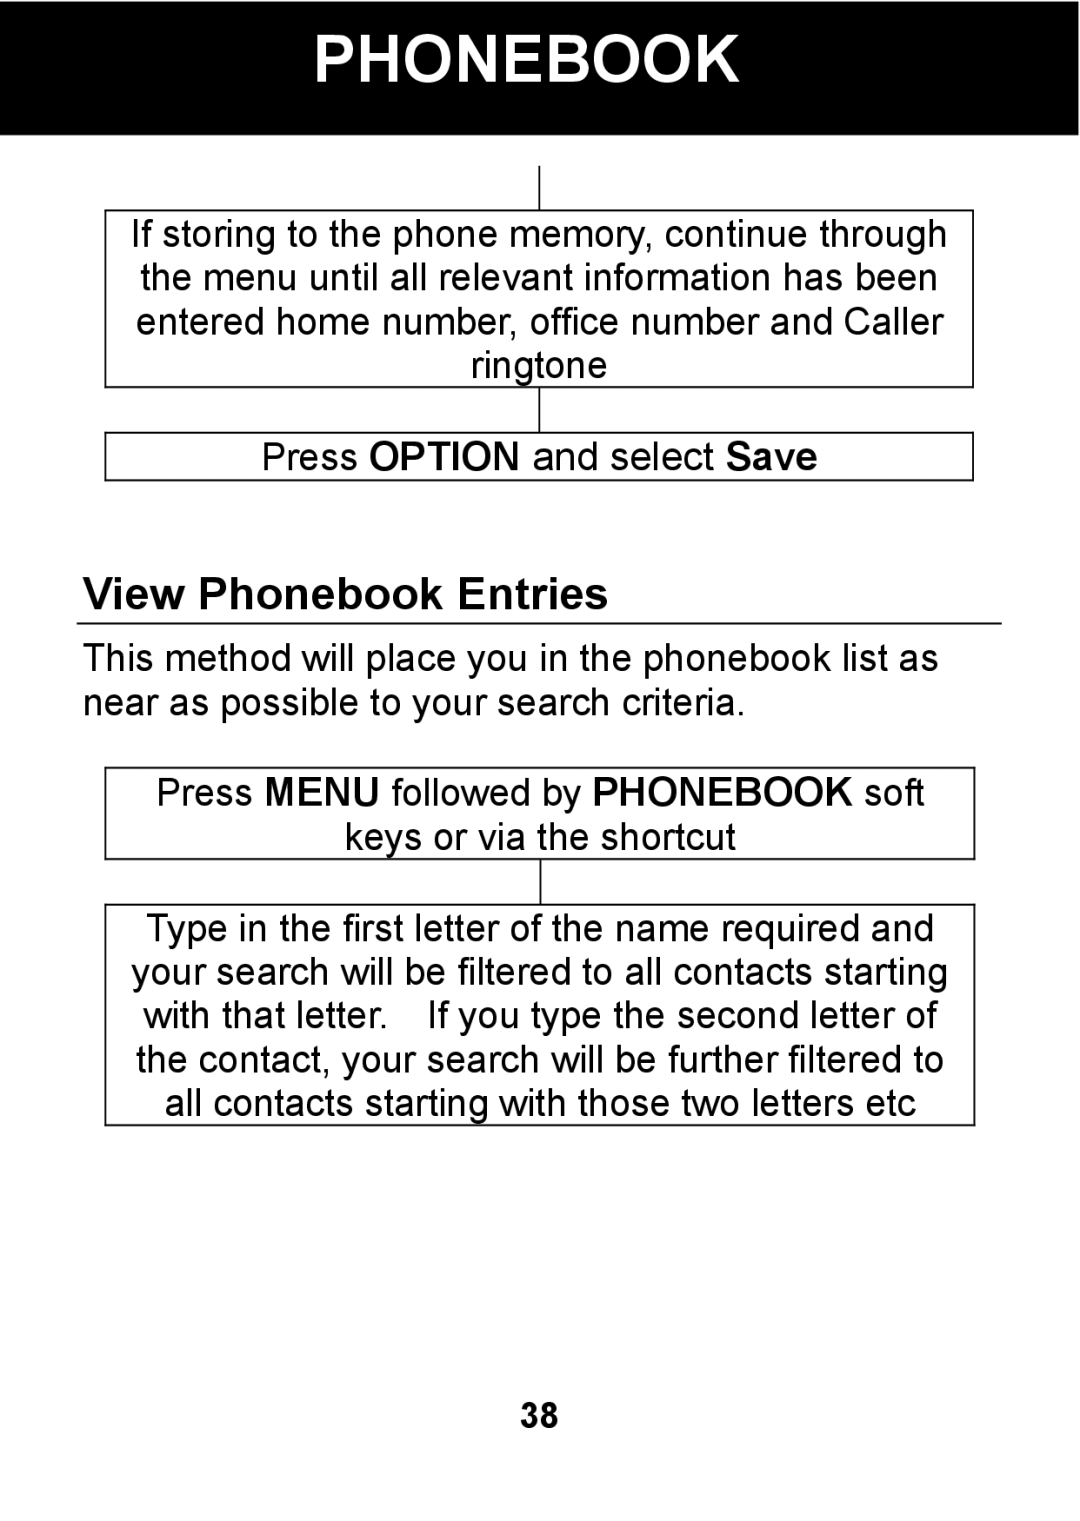 Pal/Pax PAL101 manual View Phonebook Entries, Press Option and select Save 